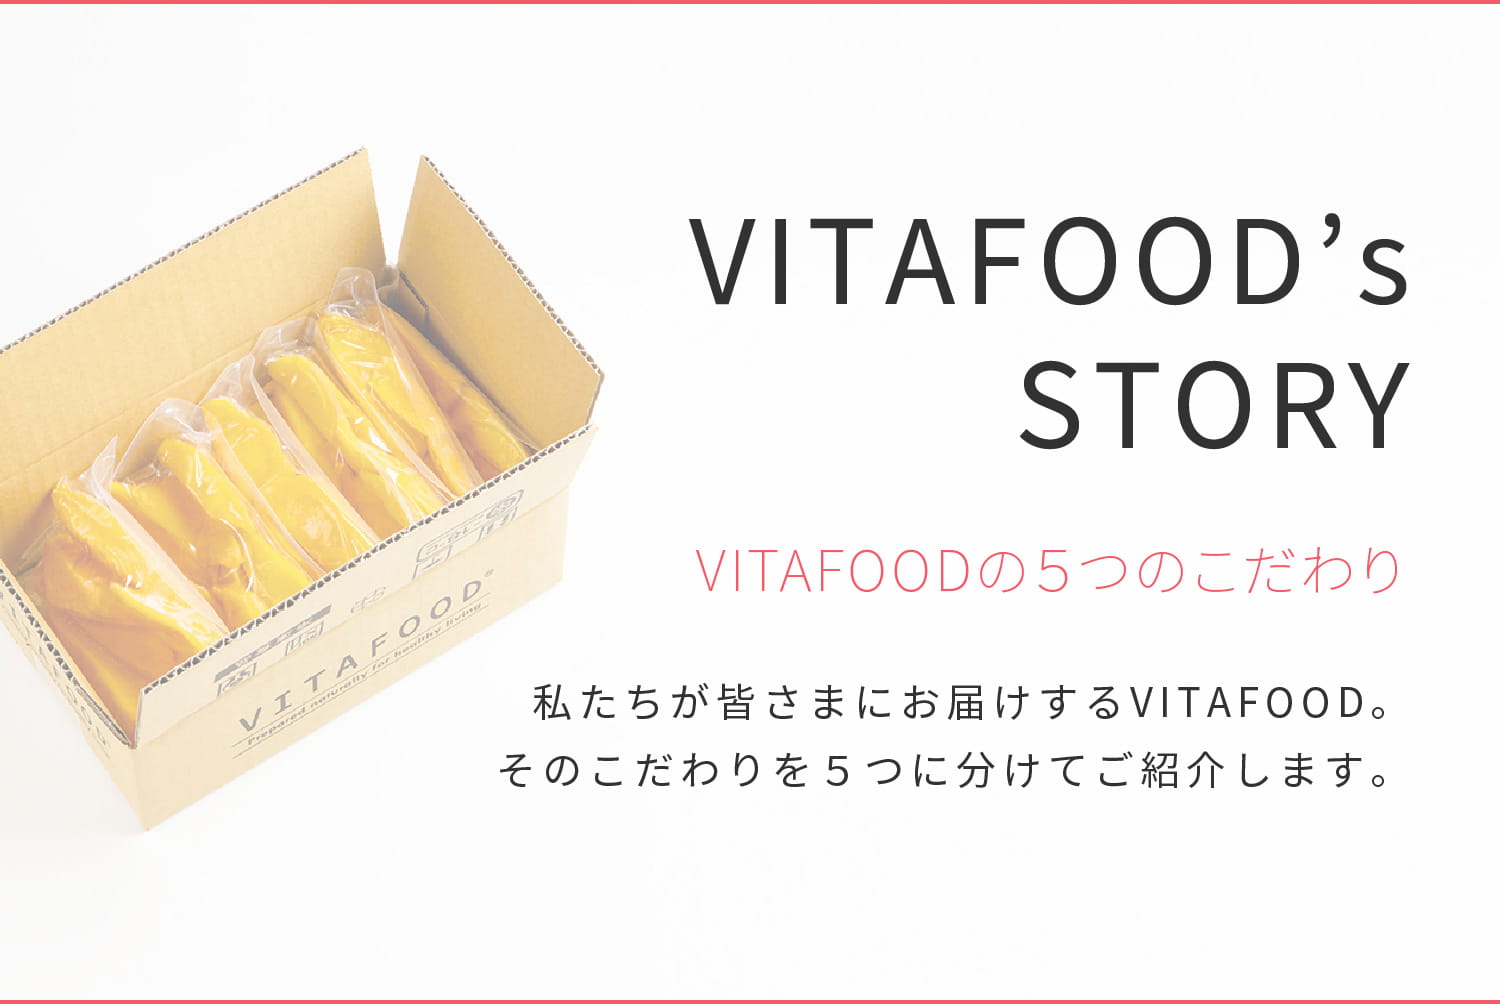 VITAFOOD’s STORY VITAFOODの５つのこだわり 私たちが皆さまにお届けするVITAFOOD。そのこだわりを５つに分けてご紹介します。